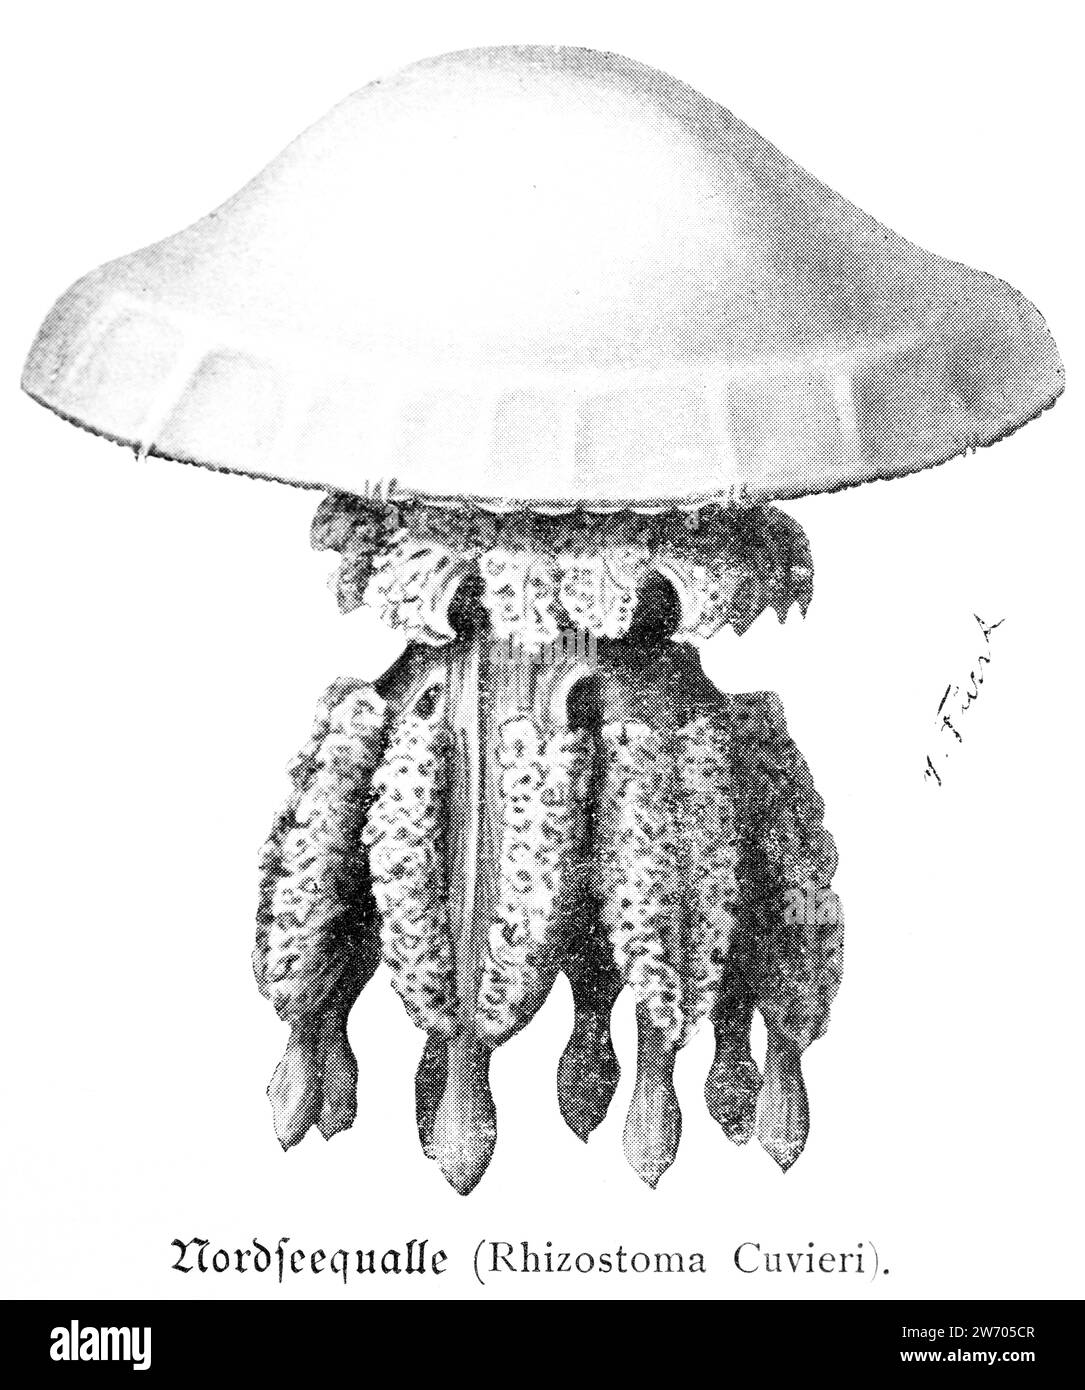 Nordseequallen (Rhizostoma cuvieri) oder Nordseequalle, Stockfoto